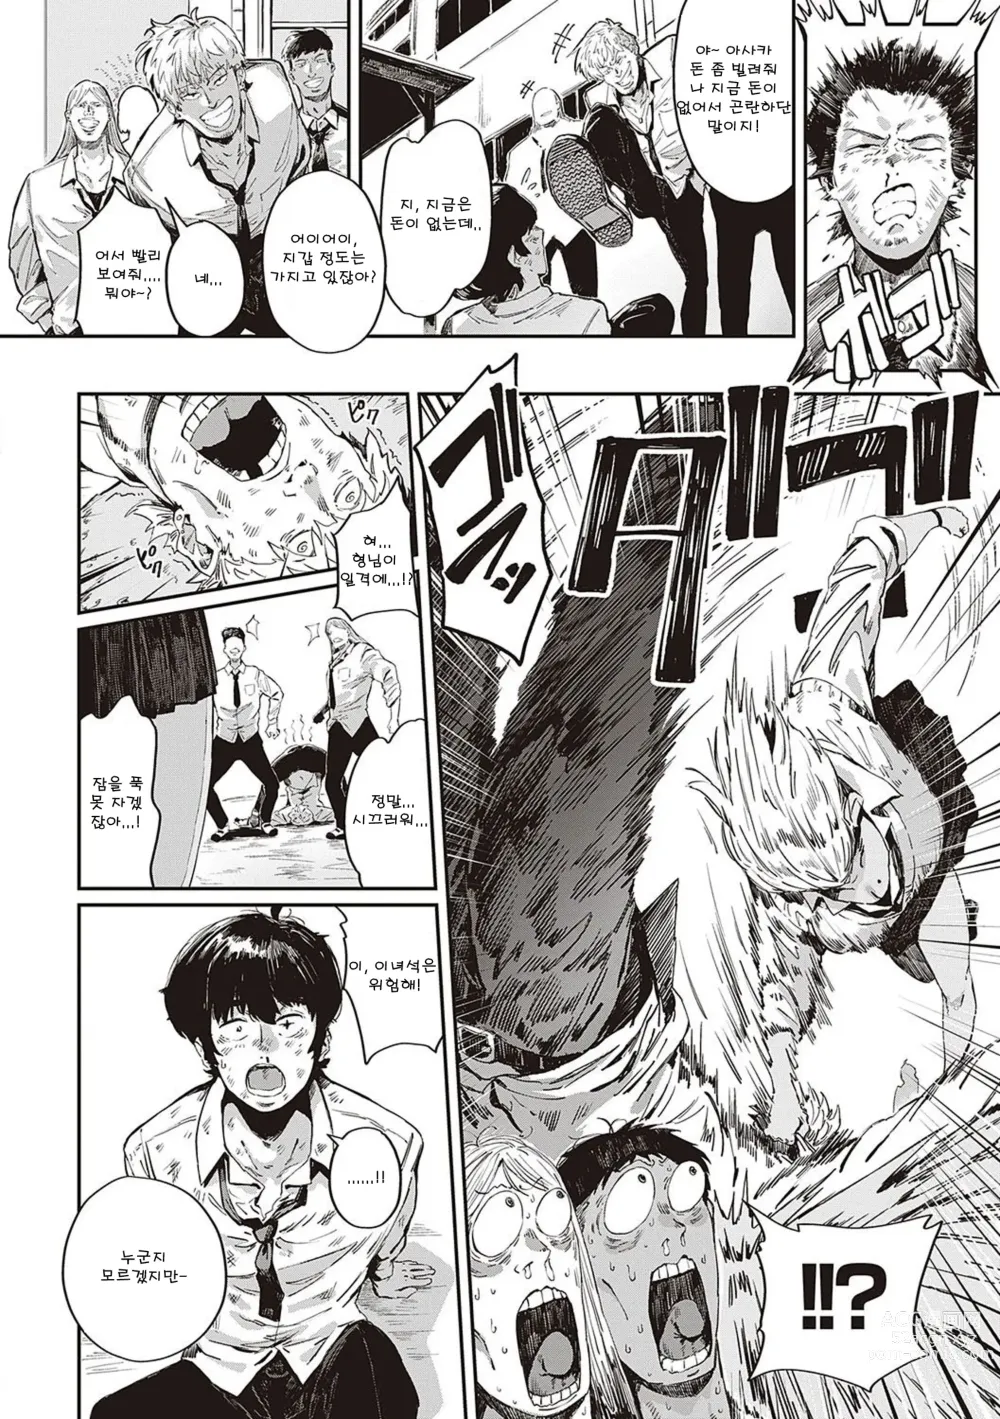 Page 6 of manga Nagisa no in-gaeshi